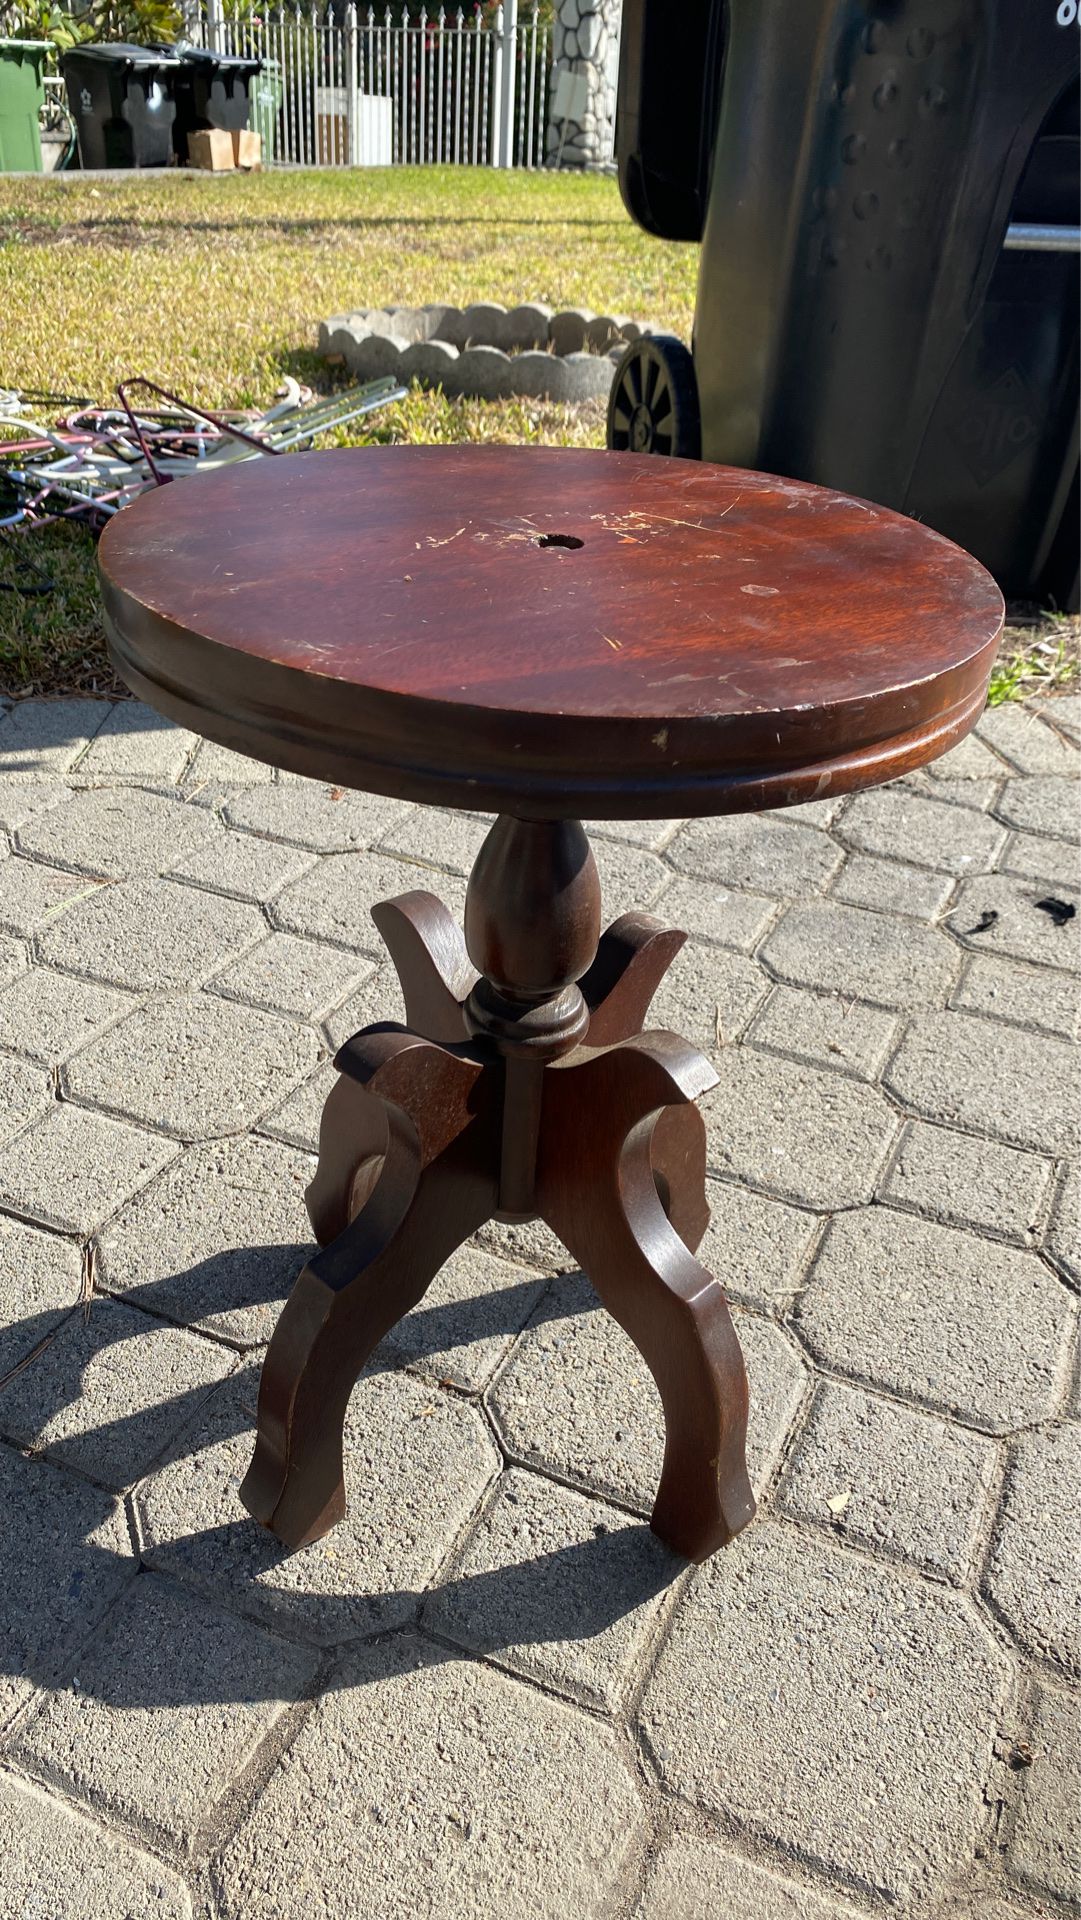 Small dark wood stool